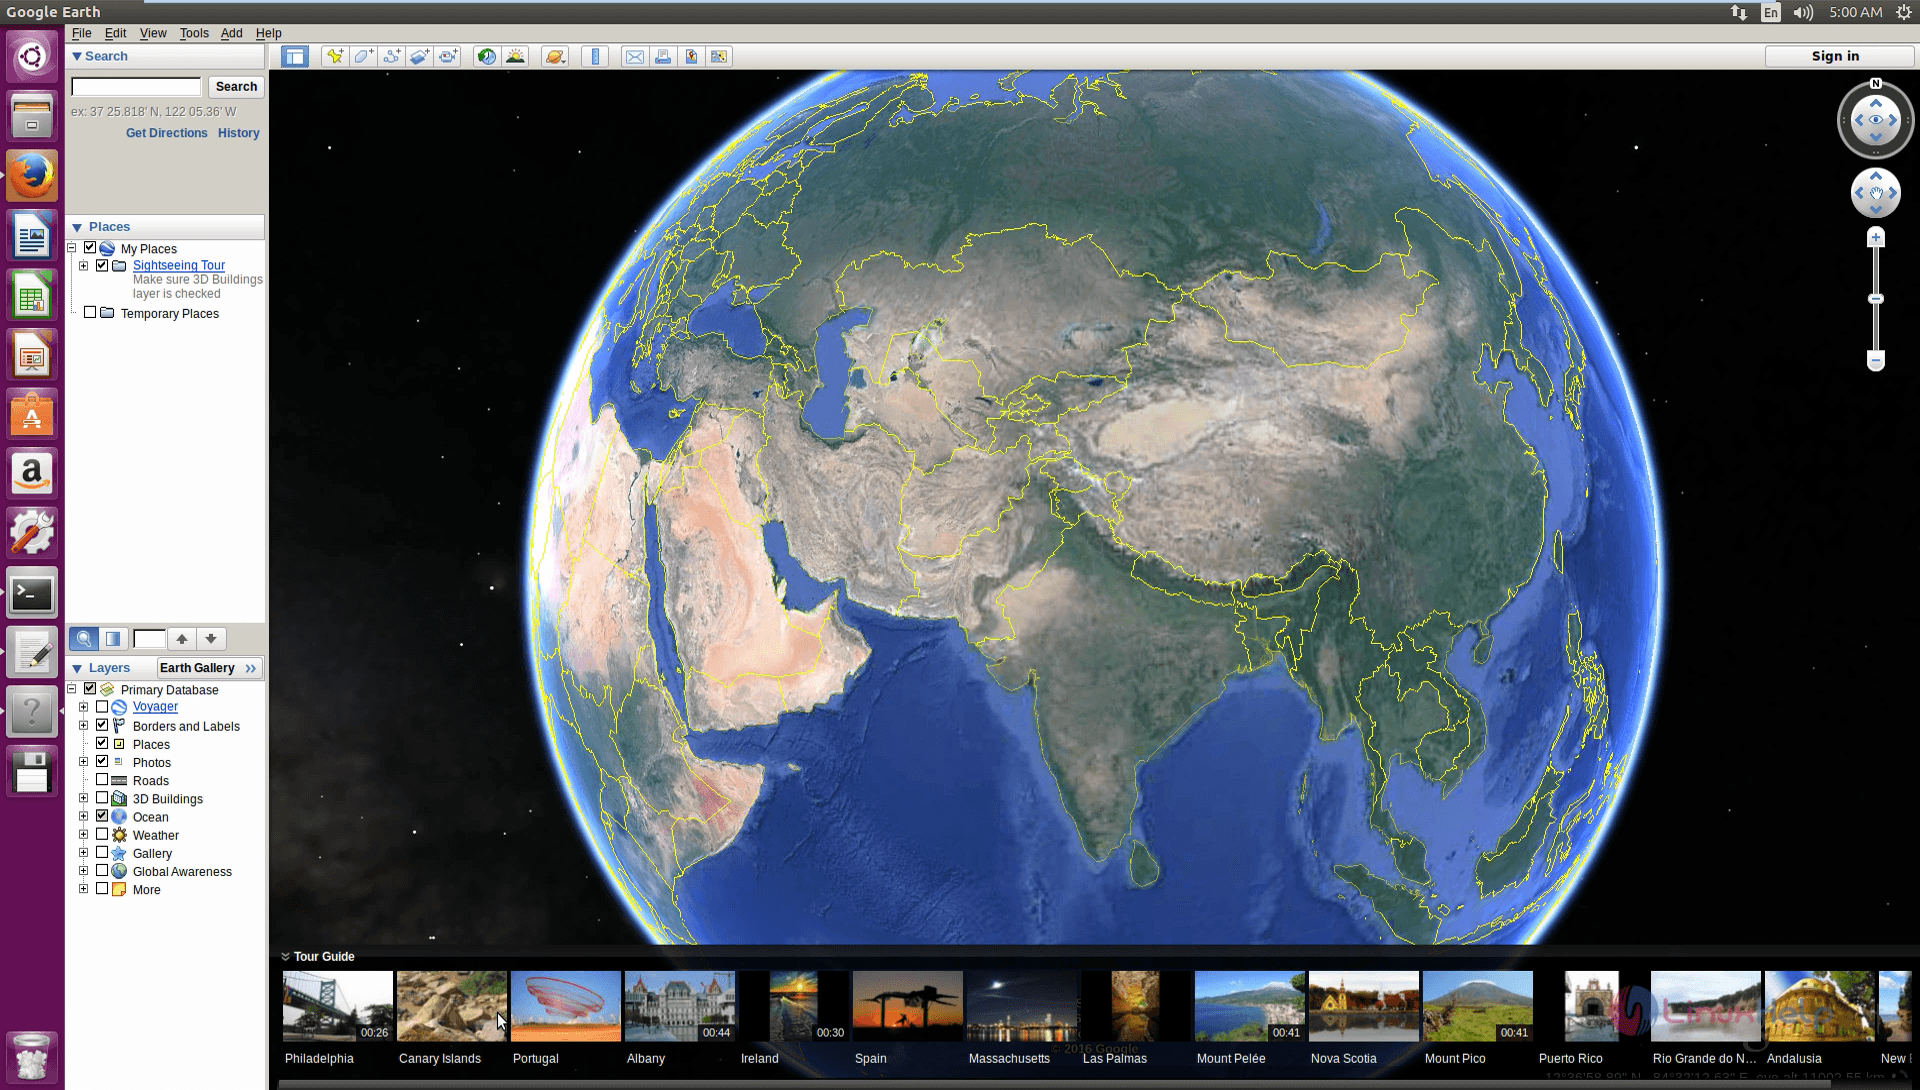 Installation_Google_Earth_Ubuntu16.04_earth_gallery